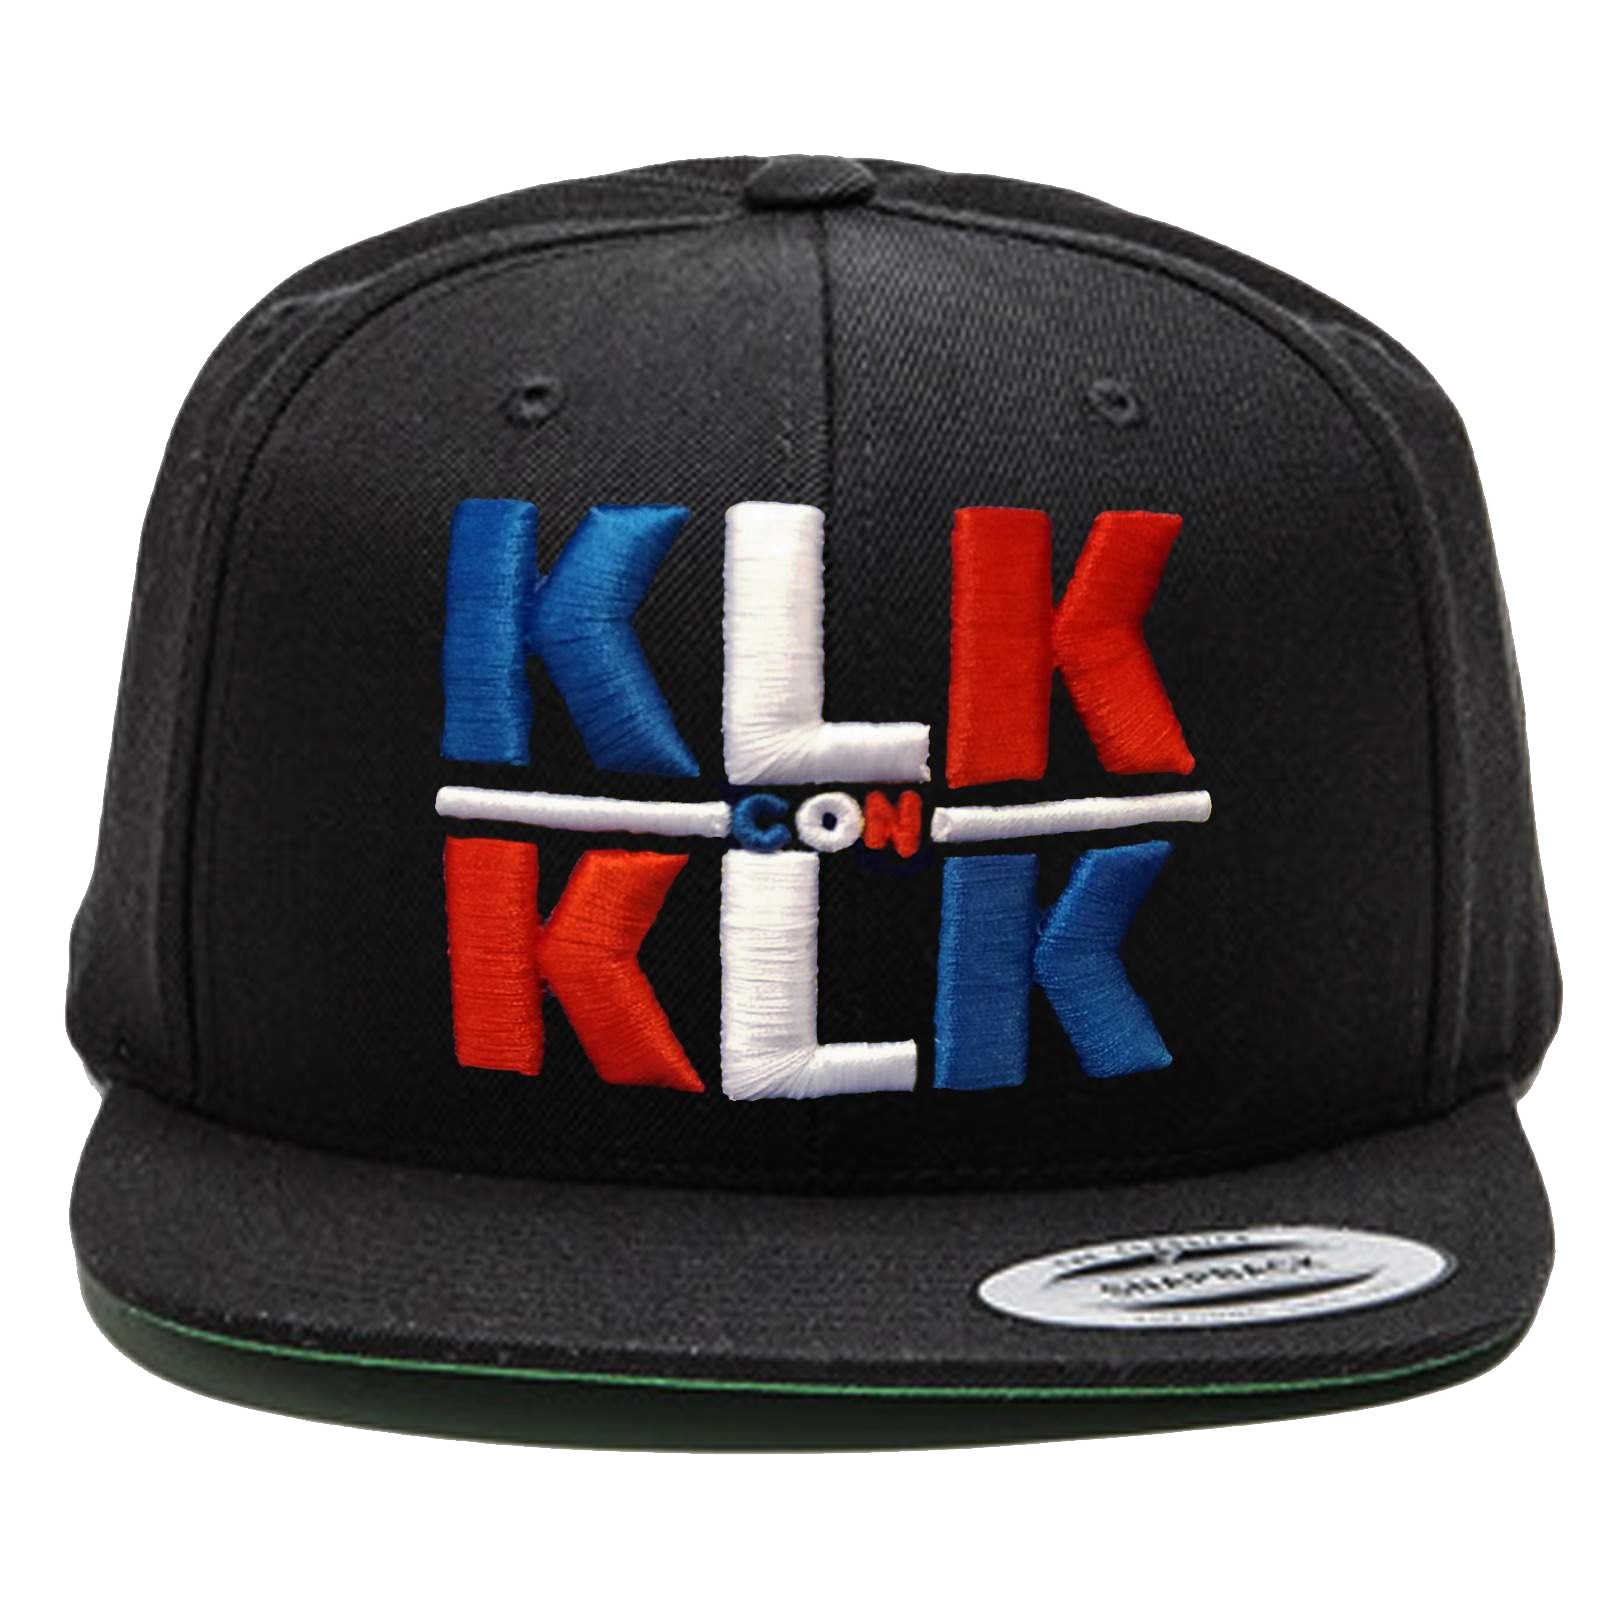 Klok Con K Lo K Hat Dominican Team Wbc Klk Peligrosports